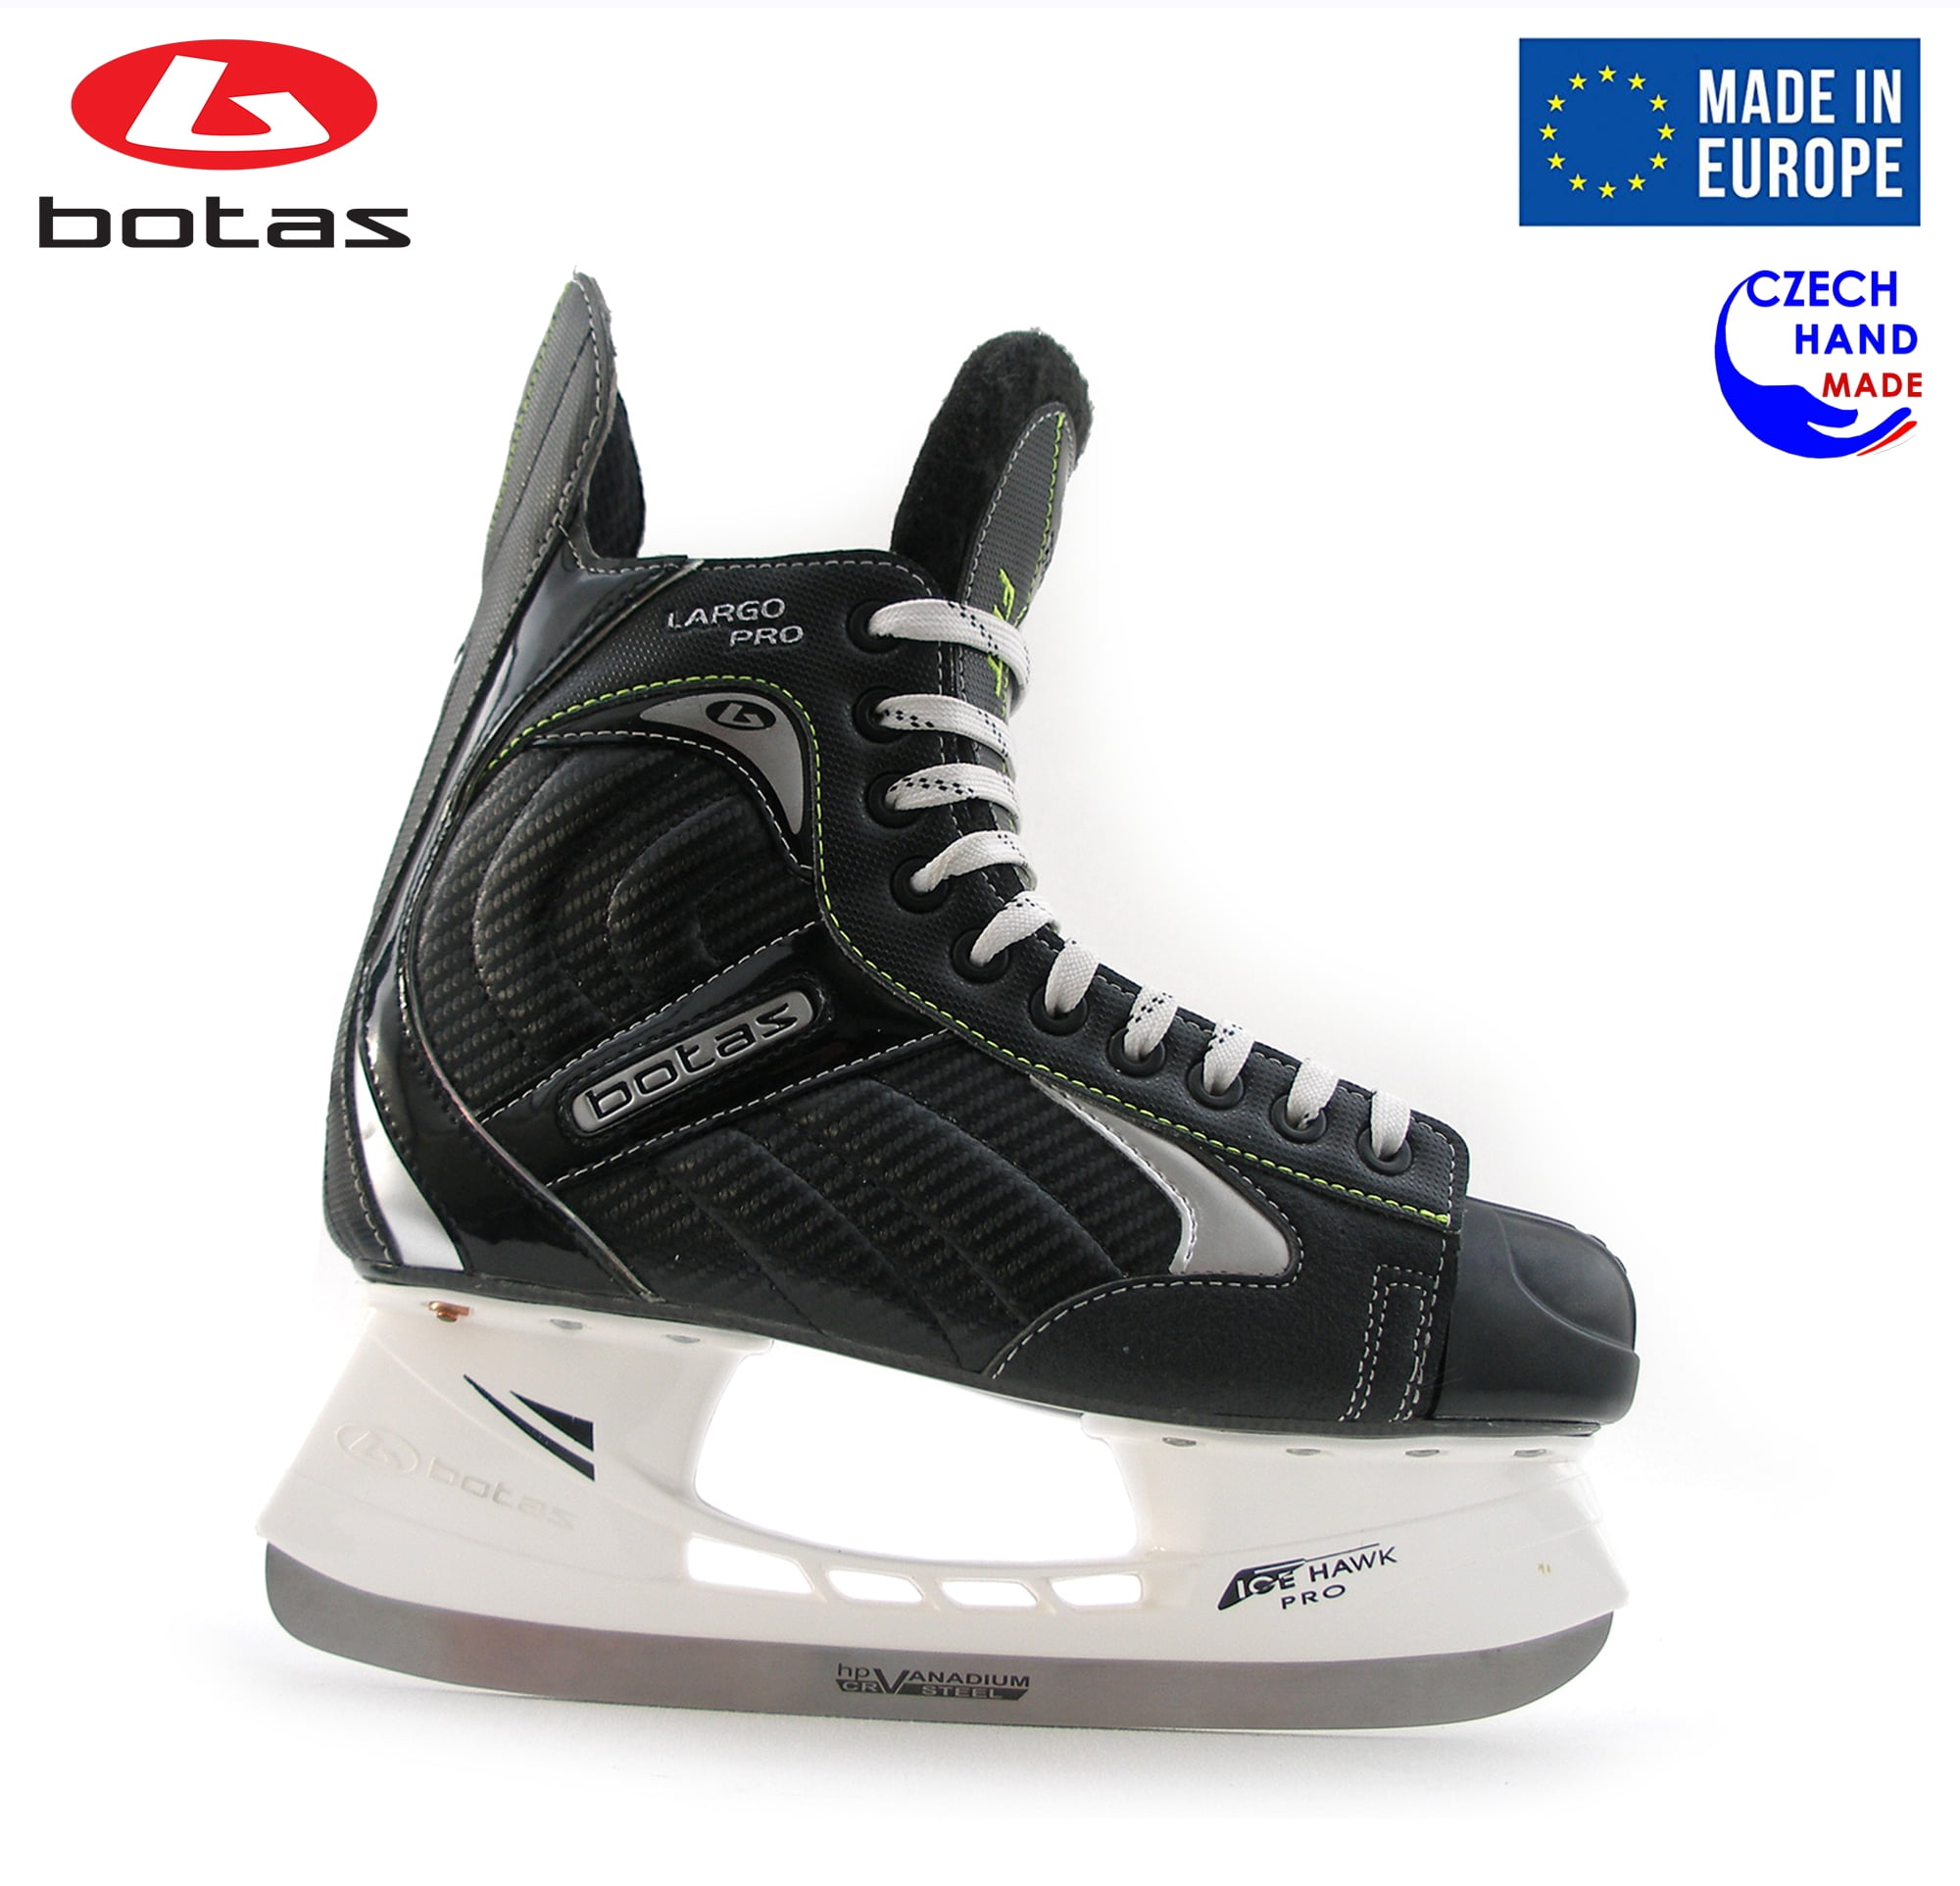 BOTAS - LARGO 571 PRO - Men's Ice Hockey Skates, Made in Europe (Czech  Republic)